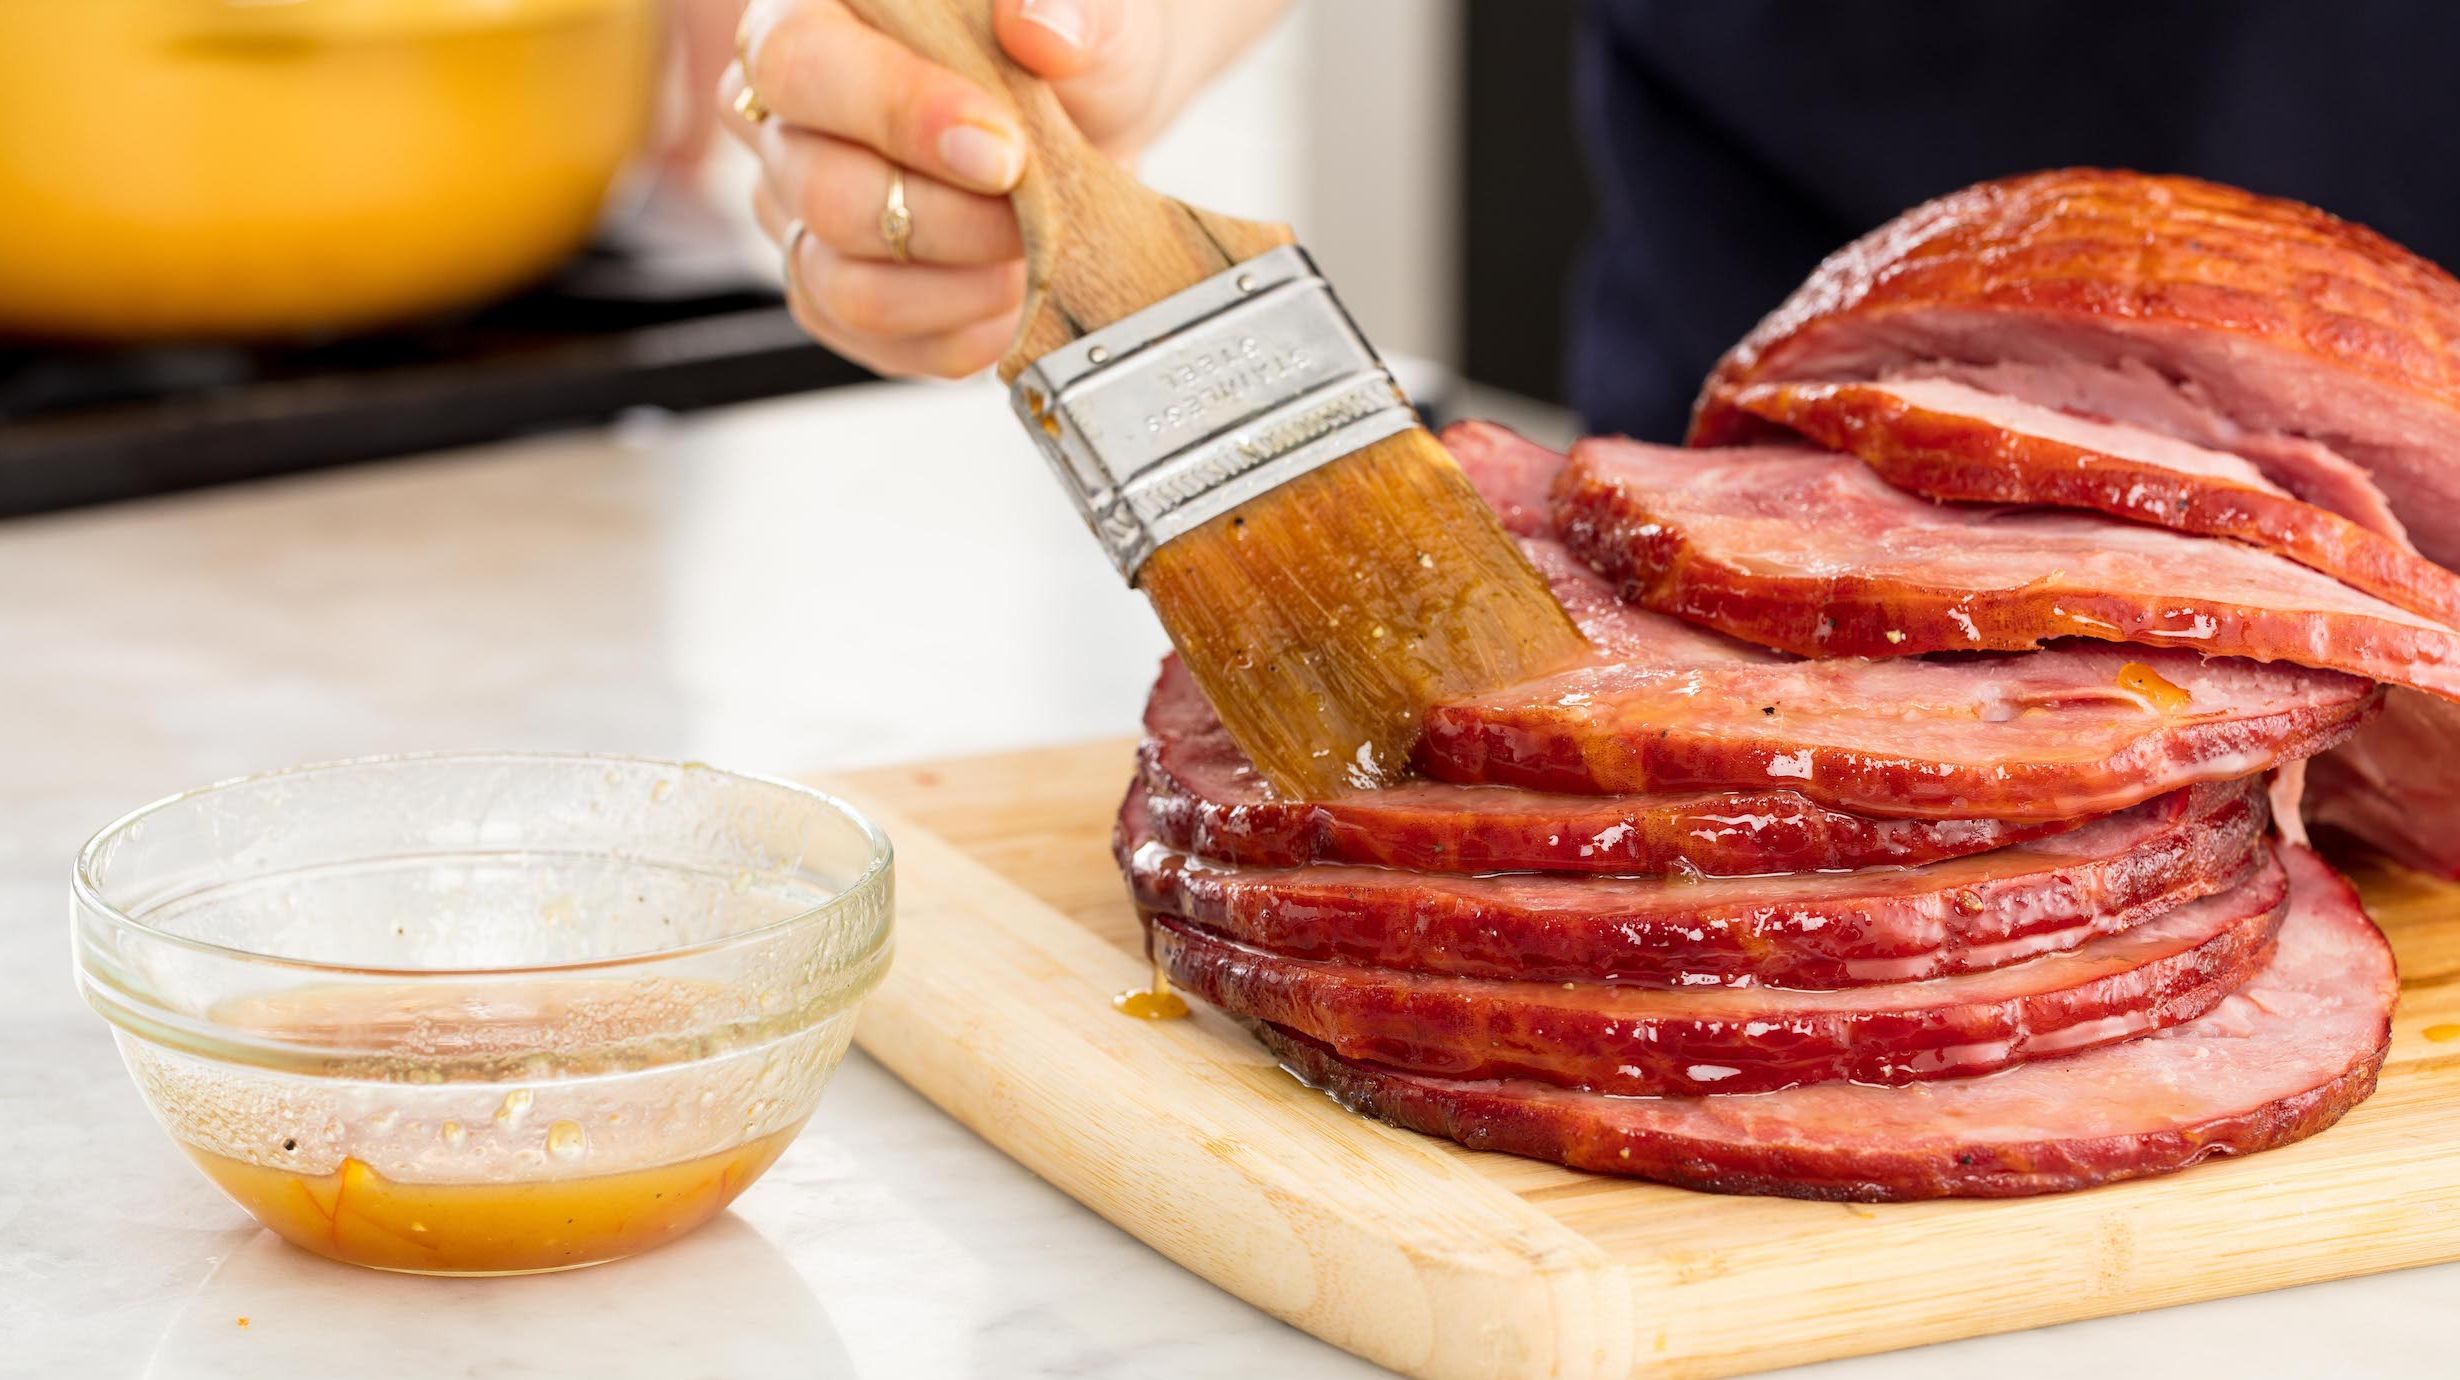 Best Glazed Easter Ham Recipe - Brown Sugar Glazed Ham